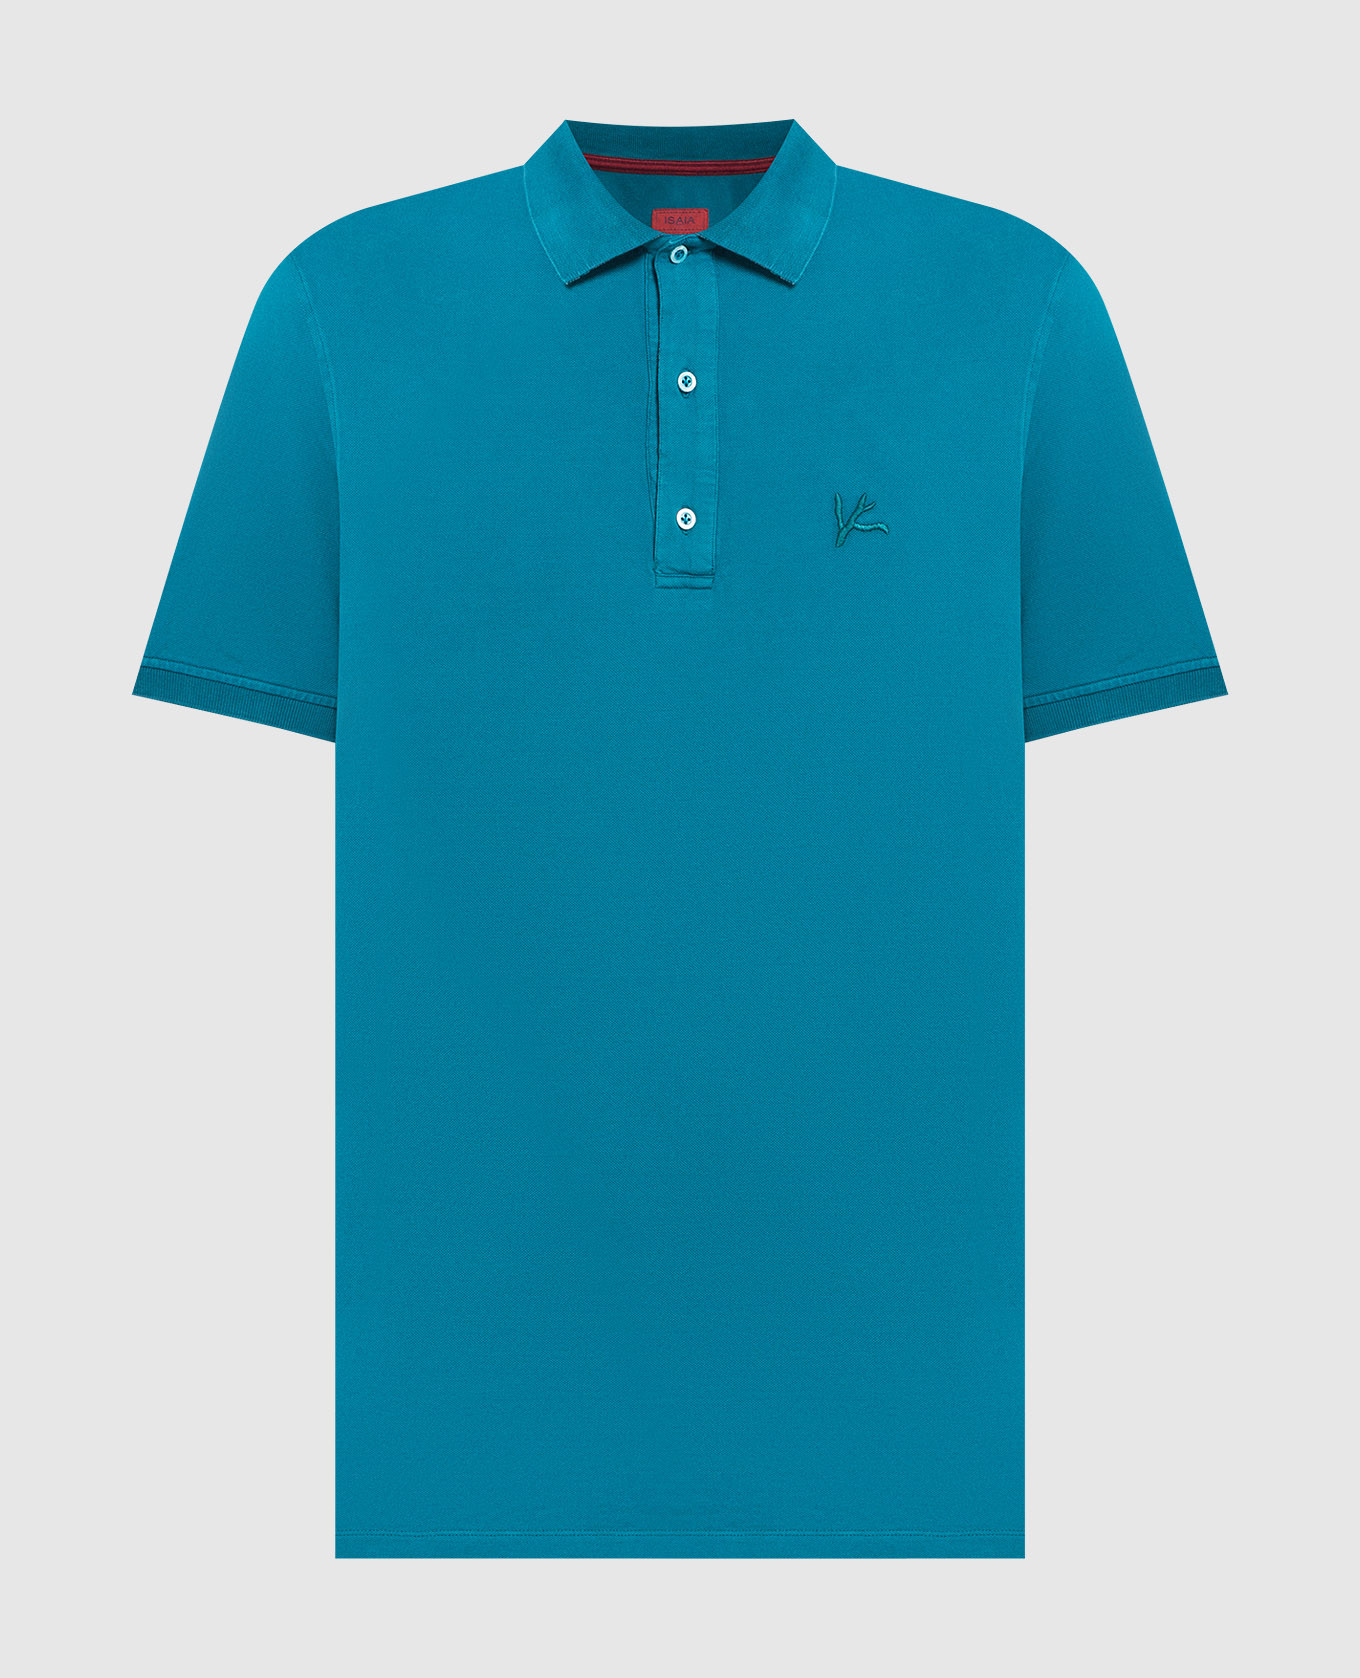 Blue polo shirt with logo